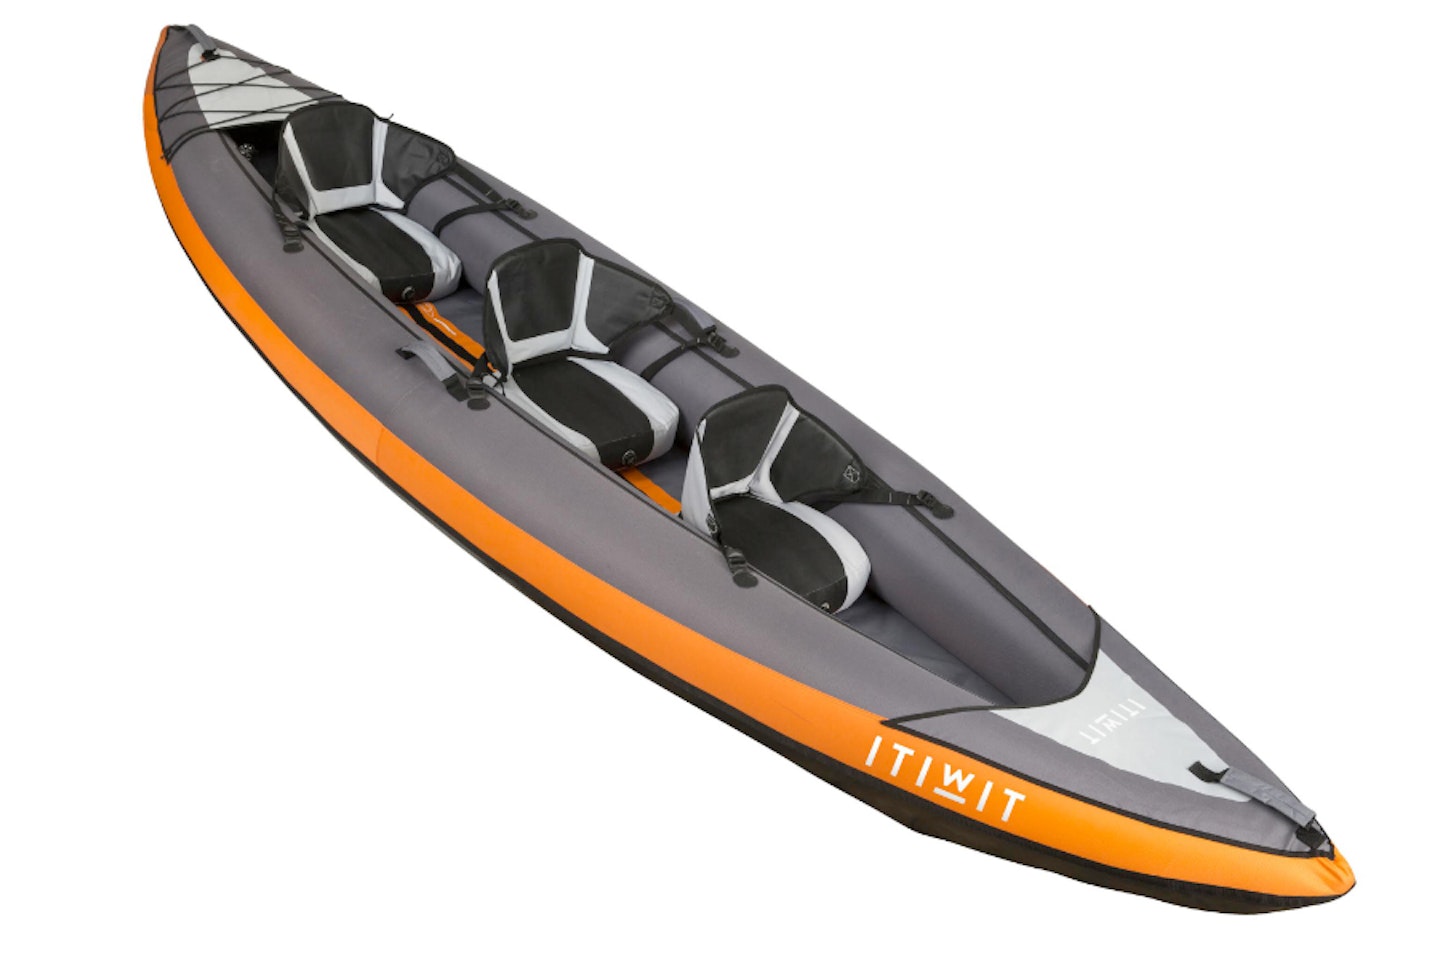 ITIWIT 100 2/3 Person Touring Inflatable Kayak